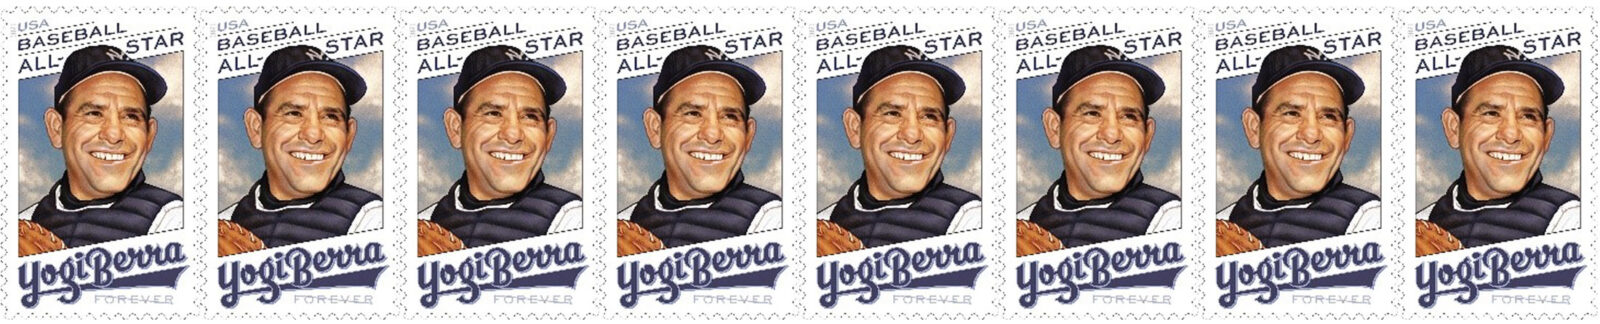 2021 Yogi Berra Postage Stamp header